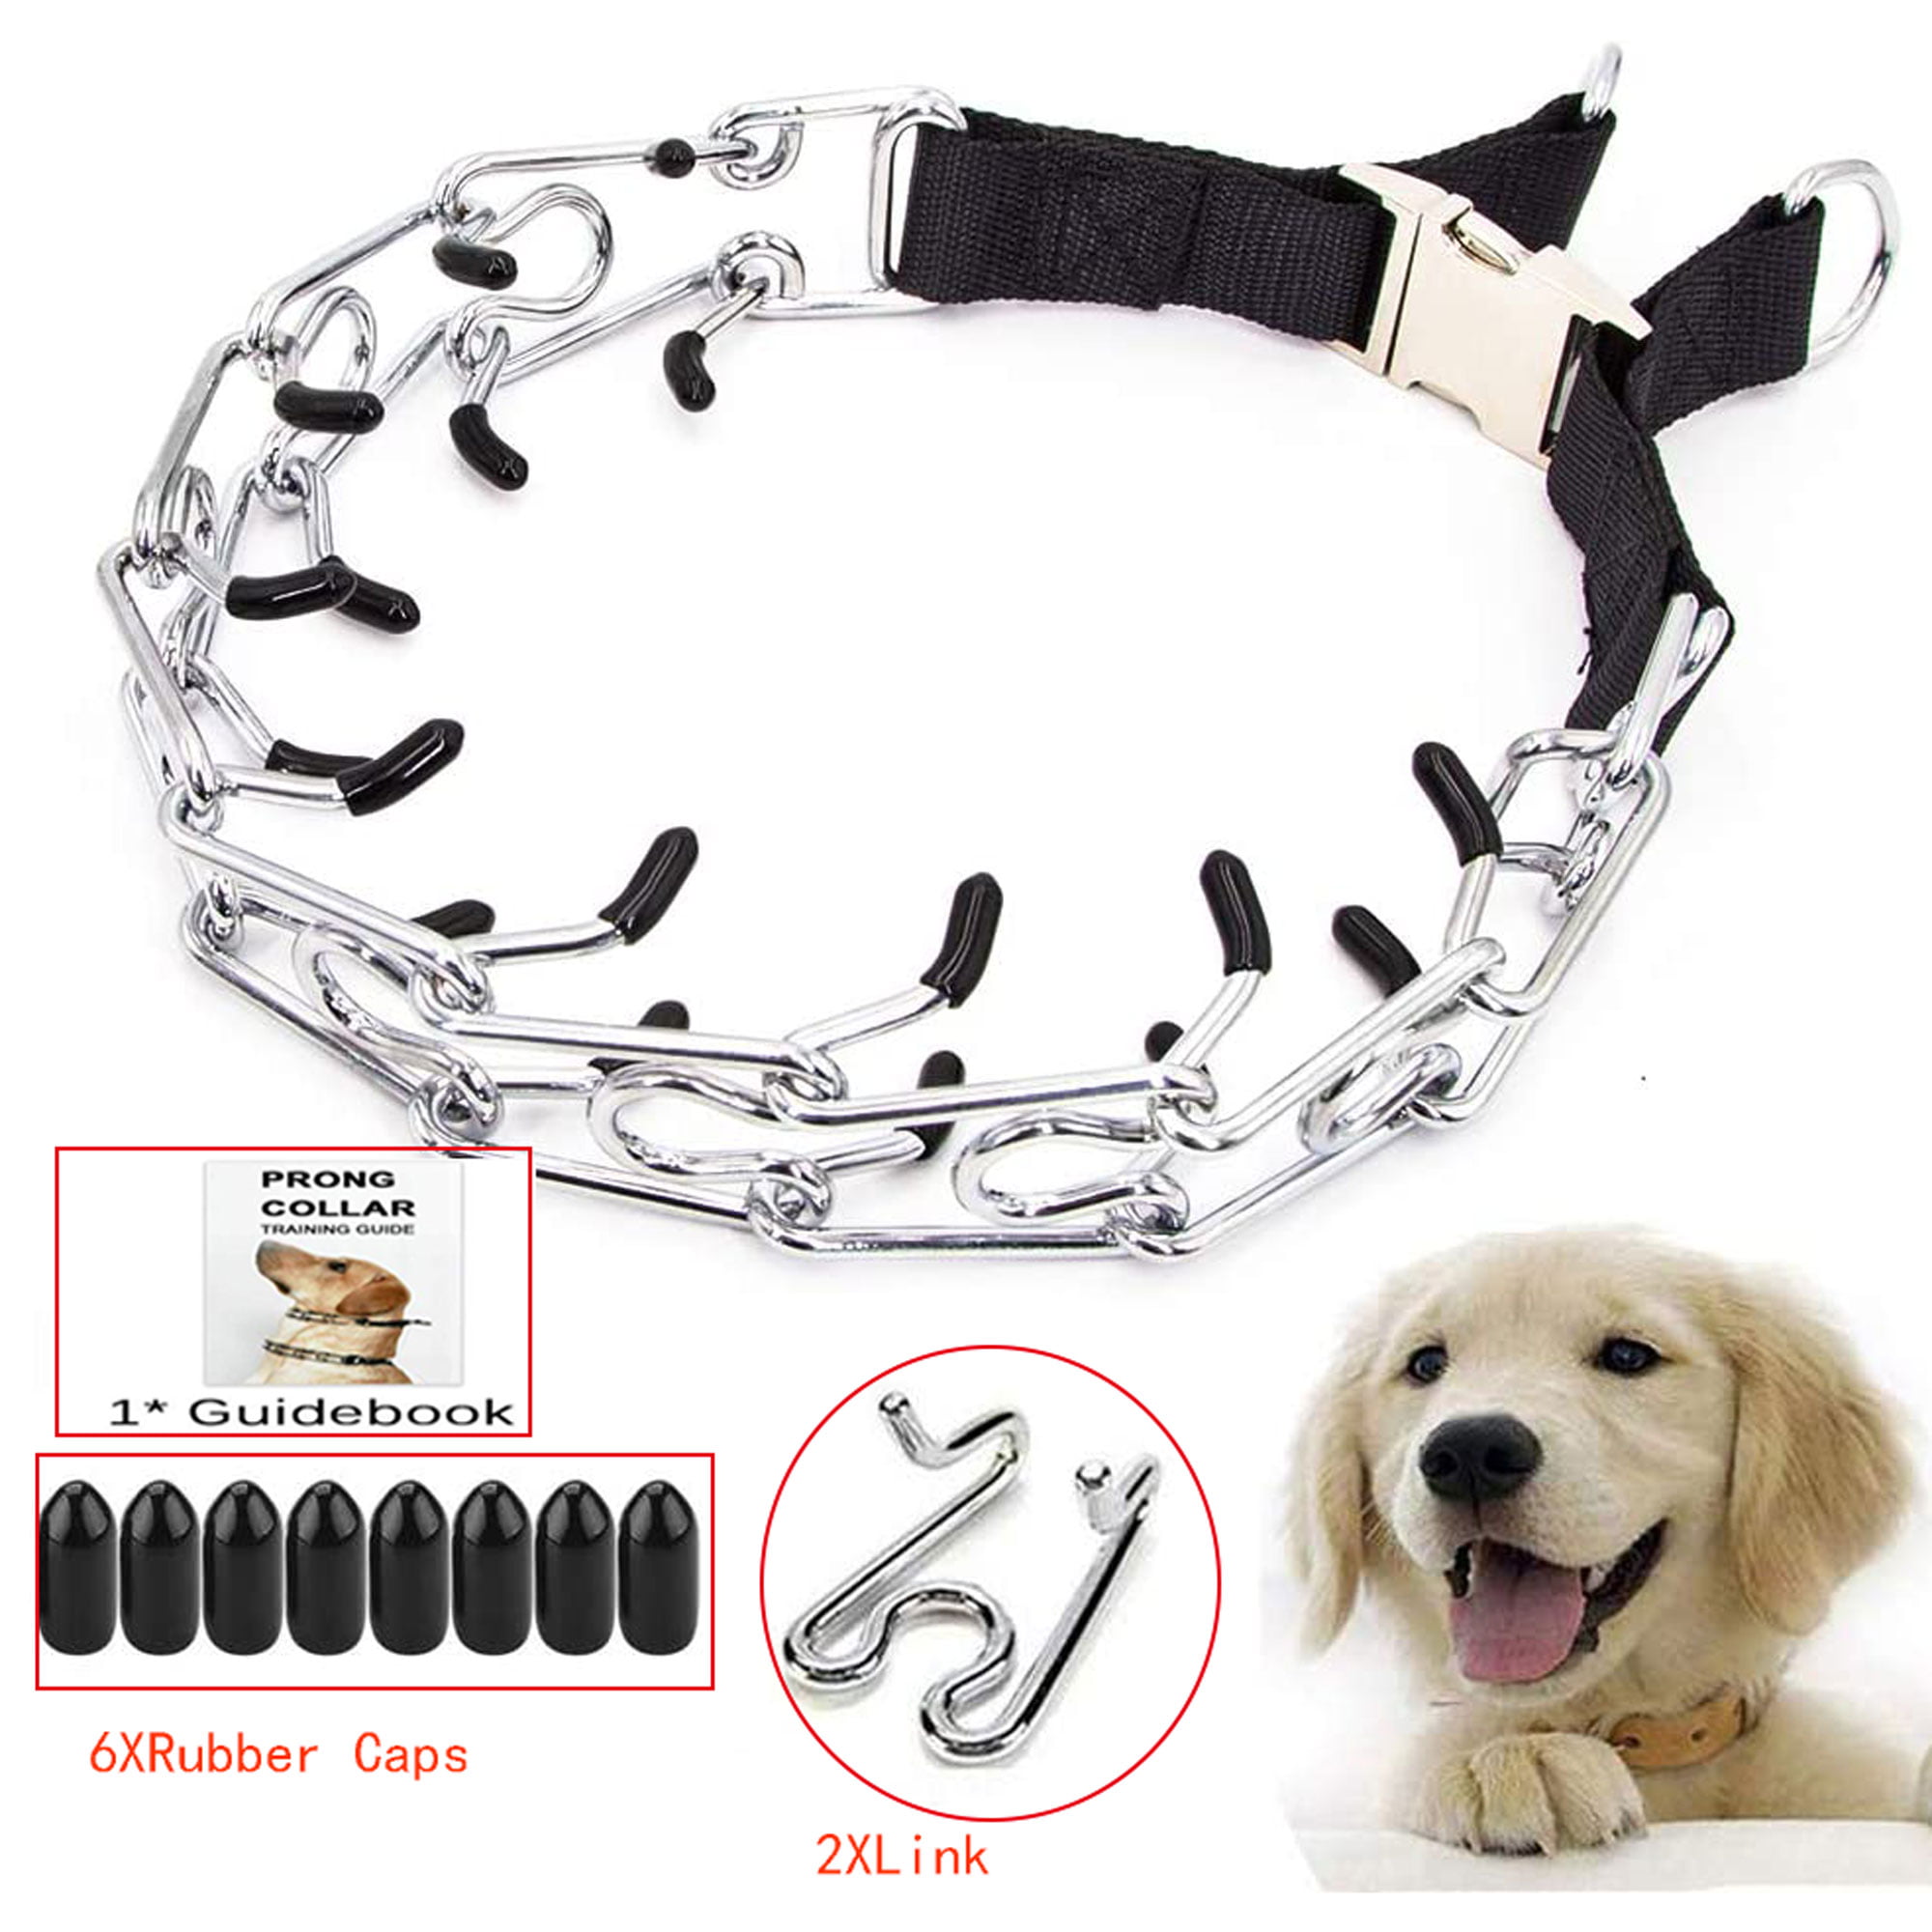 2x Stainless Steel Dog Training Choke Chain Collar Adjustable Prong Pinch Collar 